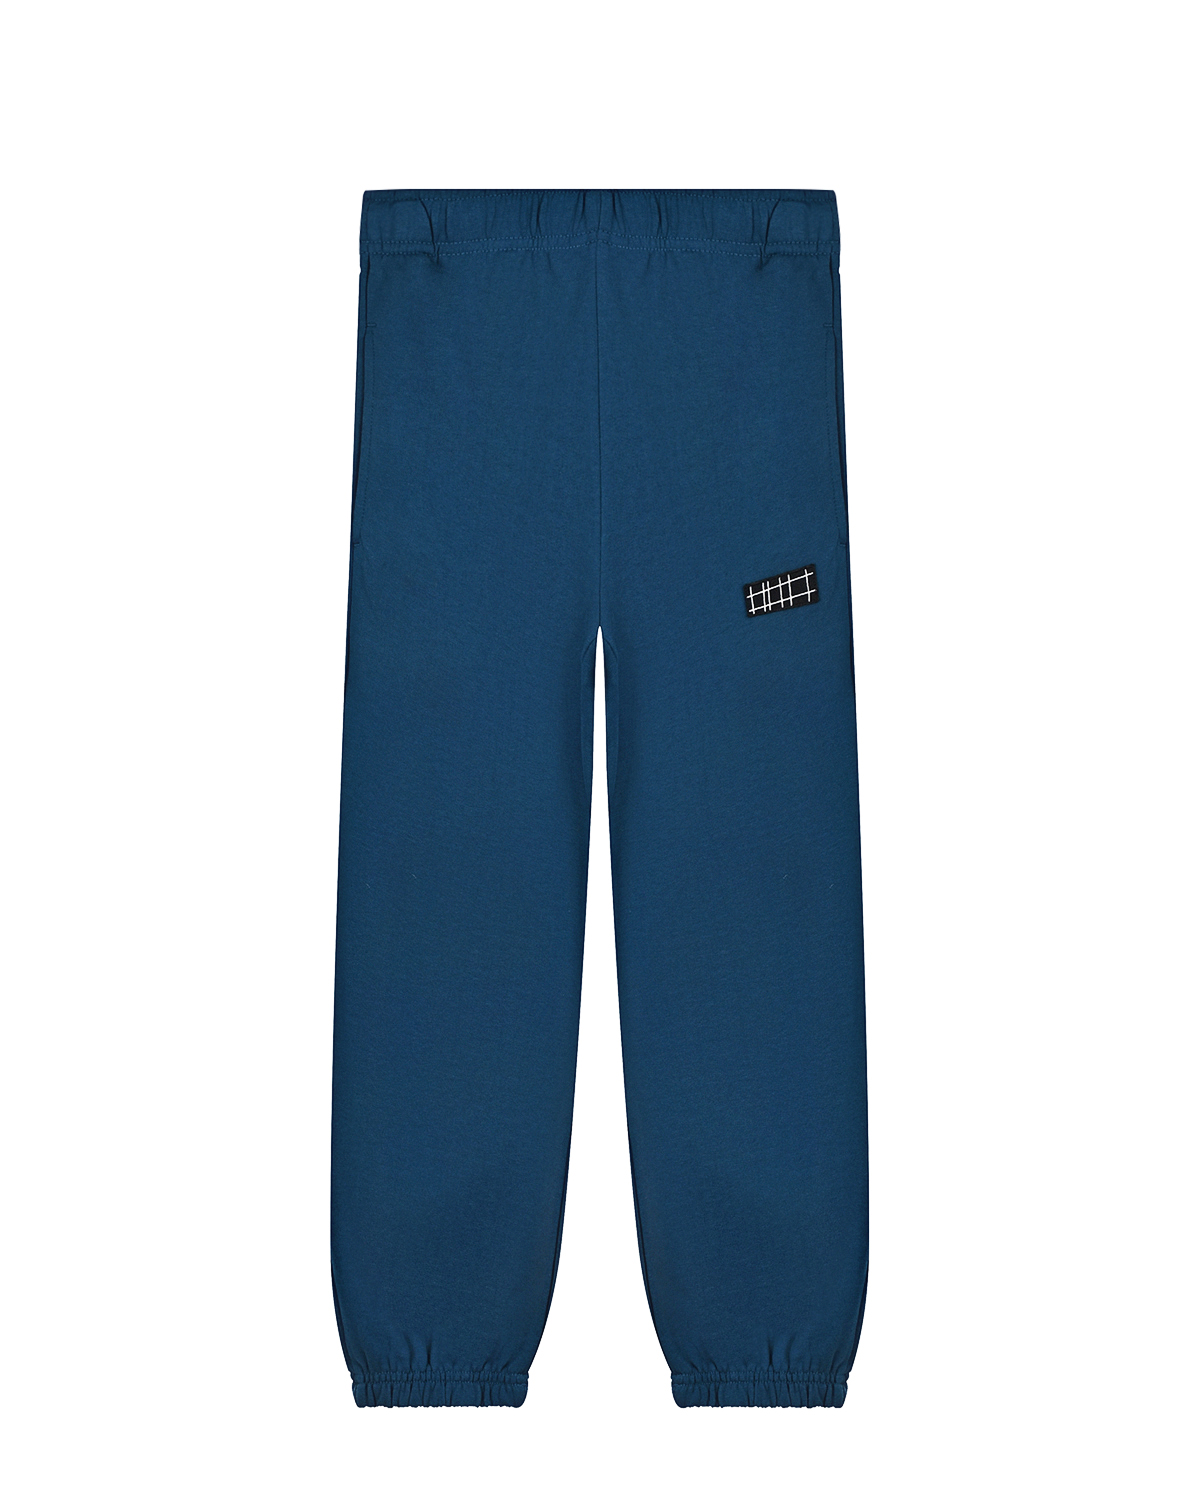 Спортивные брюки Ams "Sea" Molo детские, размер 152, цвет синий - фото 1